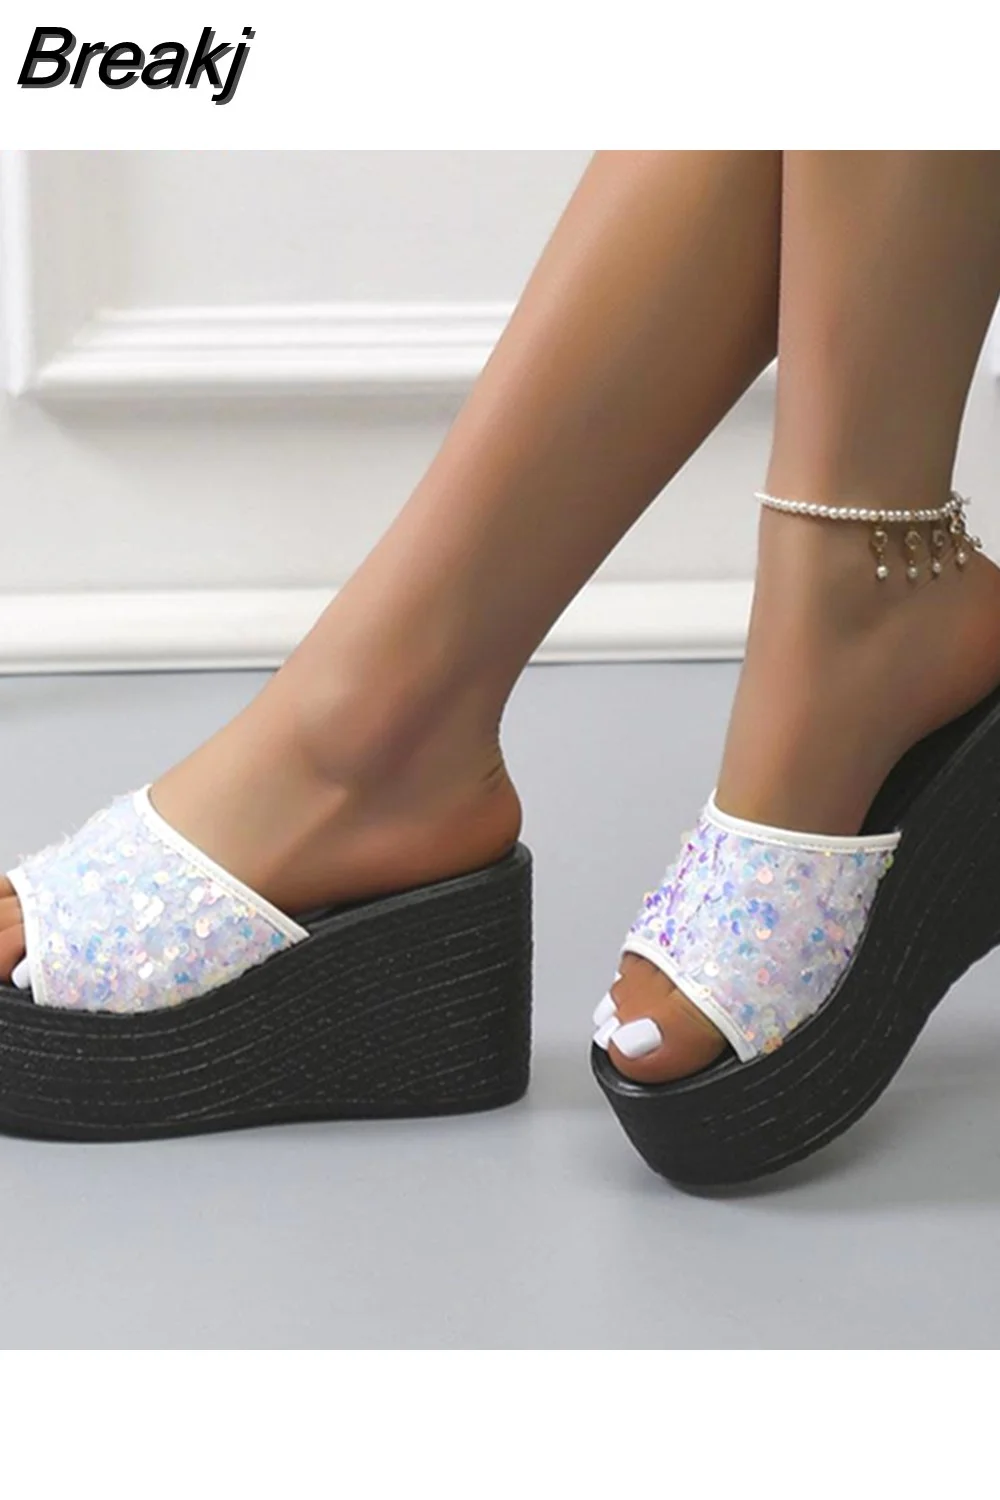 Breakj Wedge High Heeled Women Sandals New Arrived 2023 Bling Sequin Lady Slipper Peep Toe Comfort Walk Causal Sandals Plus Size